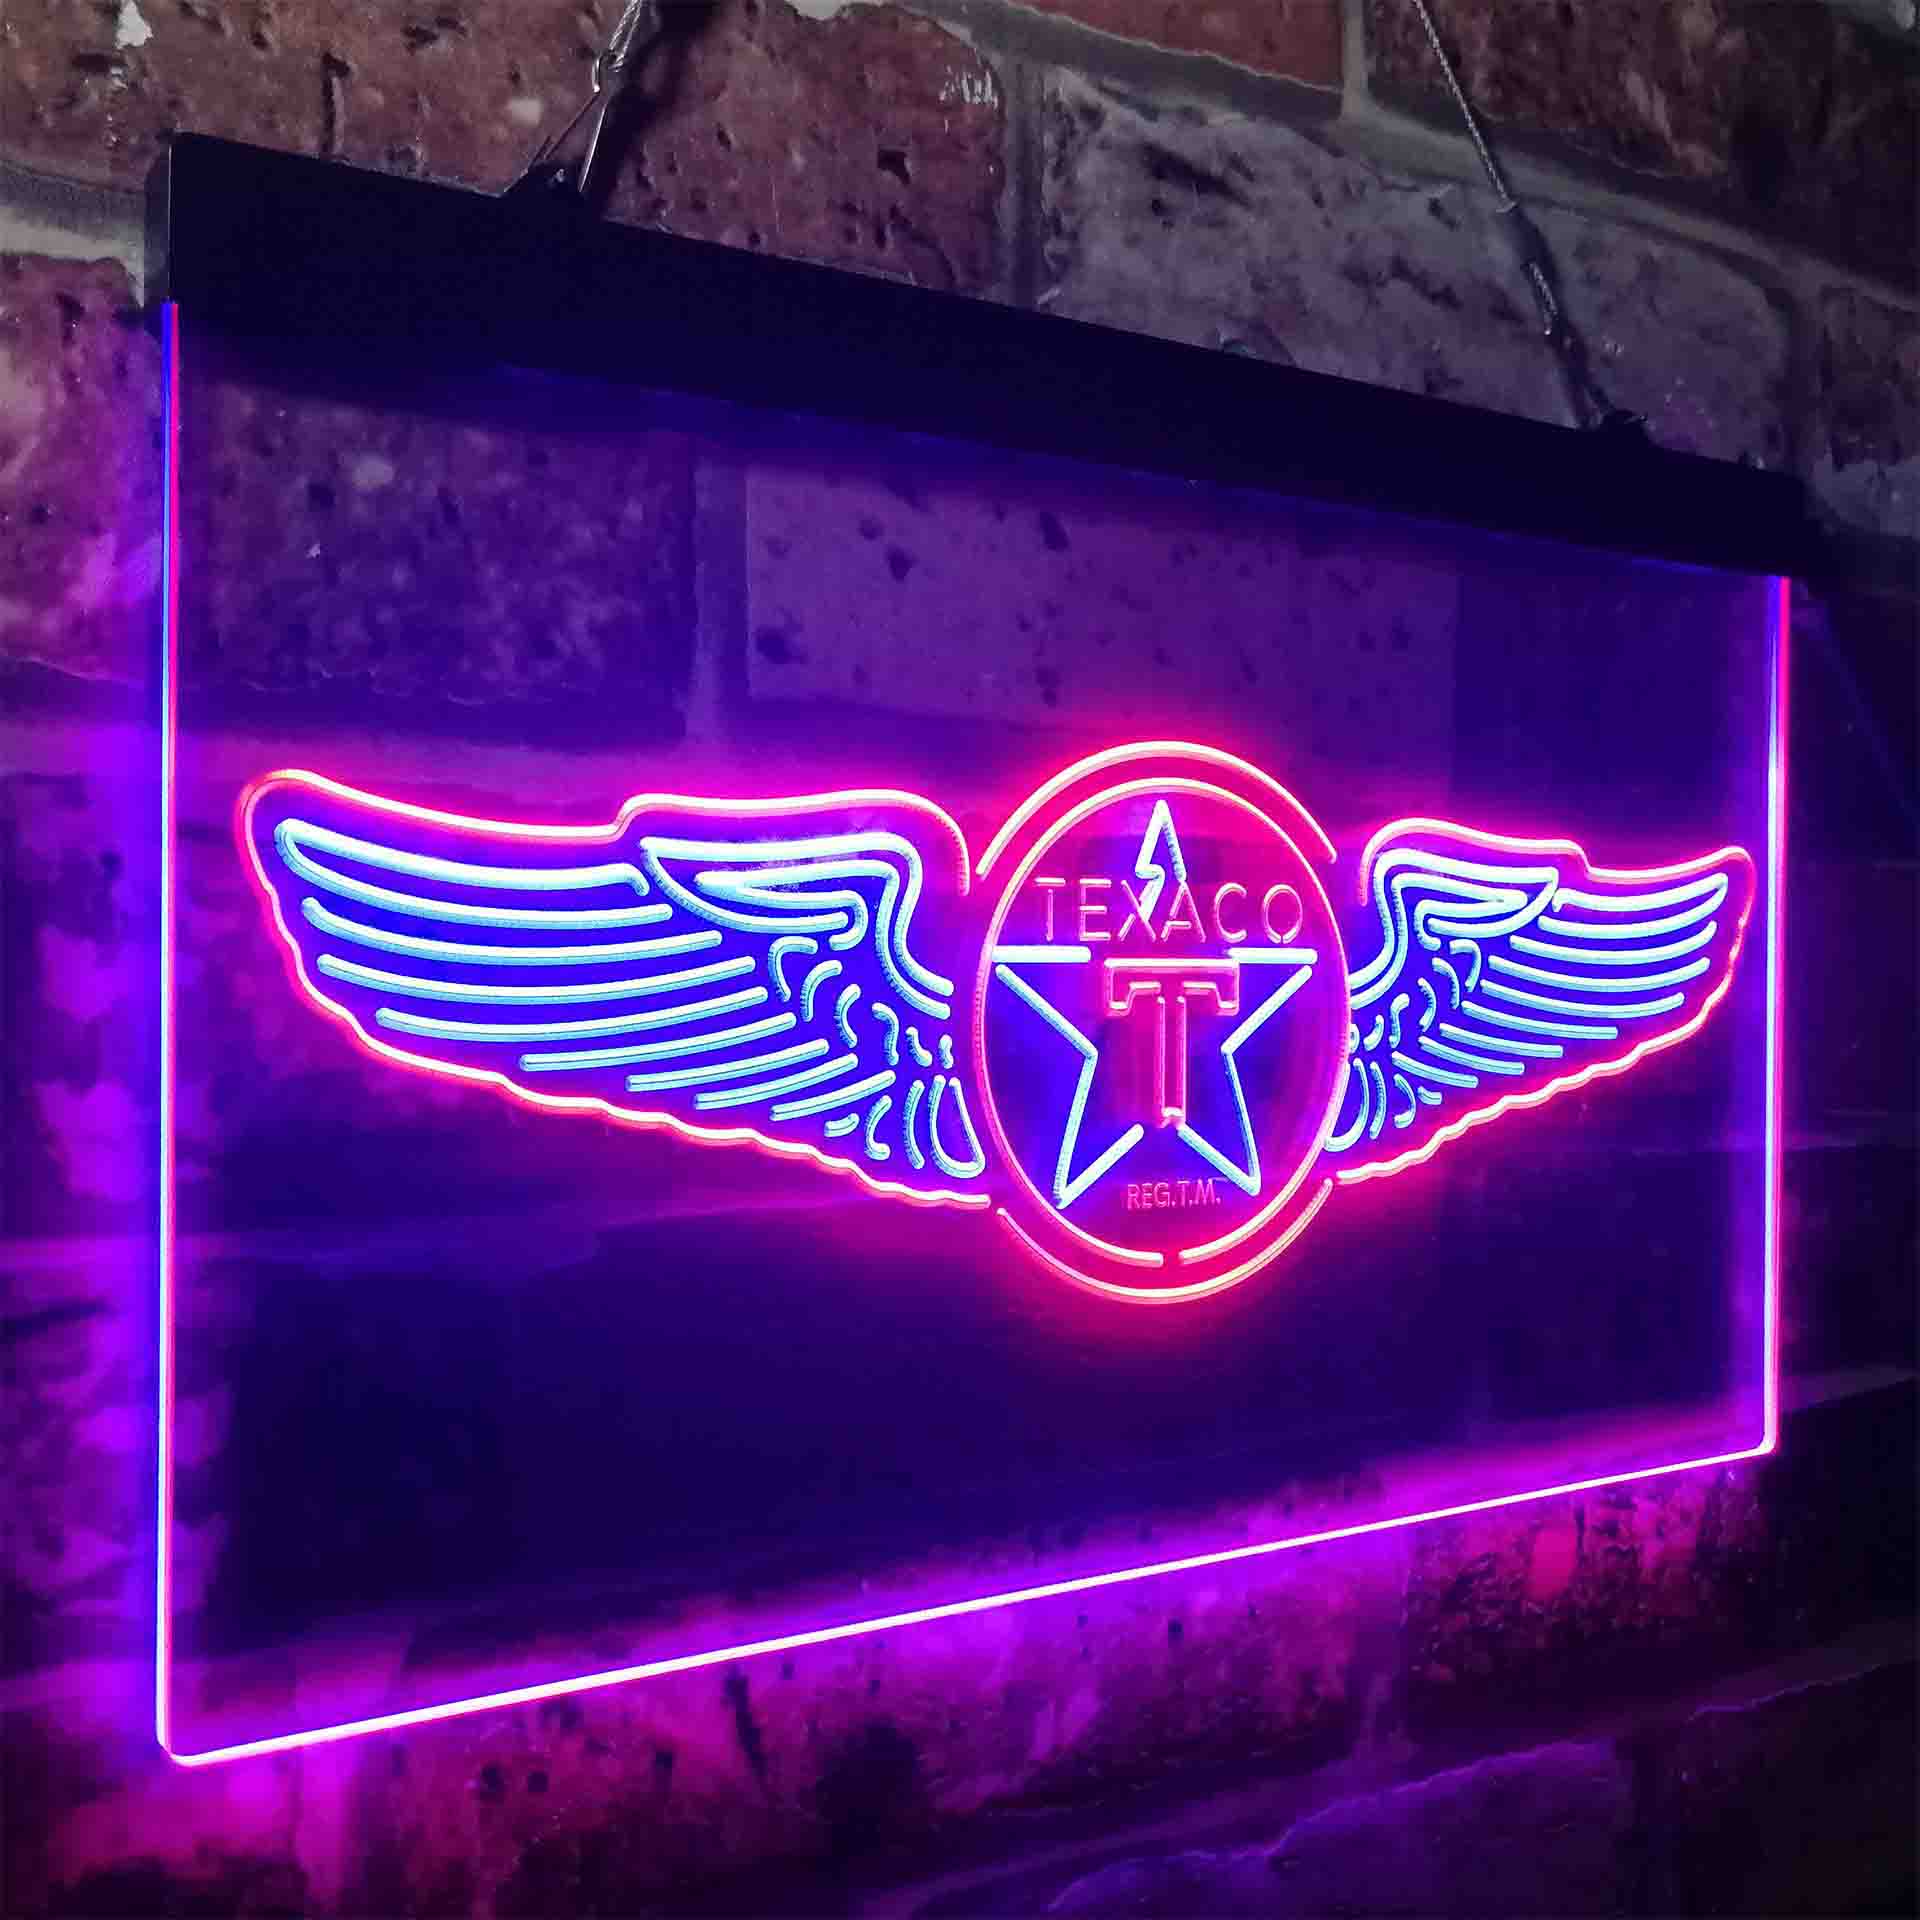 Texaco Oil Wing Star LED Neon Sign